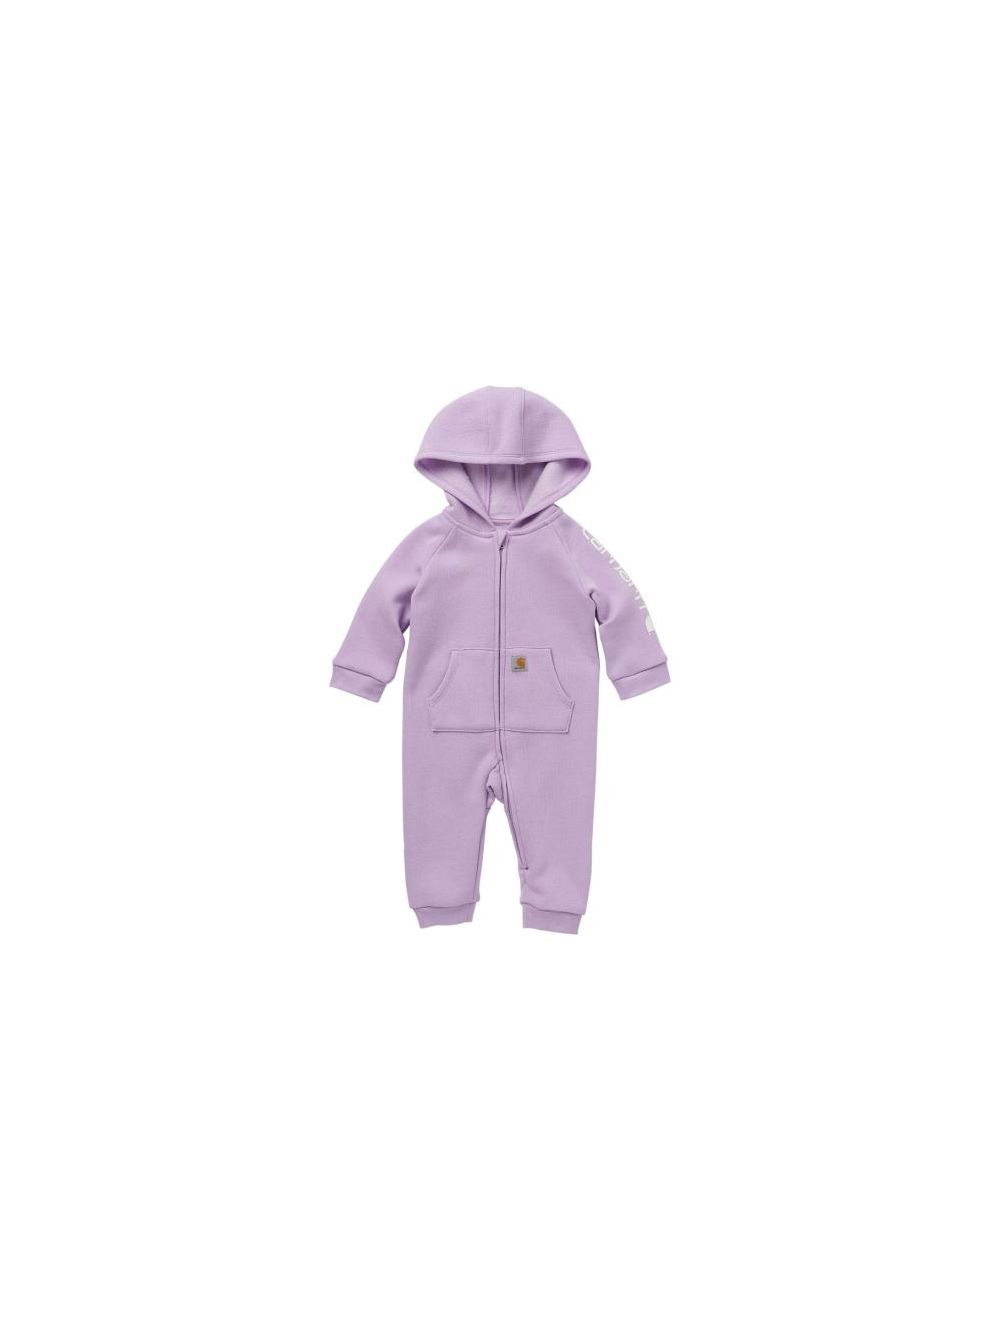 Carhartt Infant Long-Sleeve Fleece Zip-Front Hooded Coverall